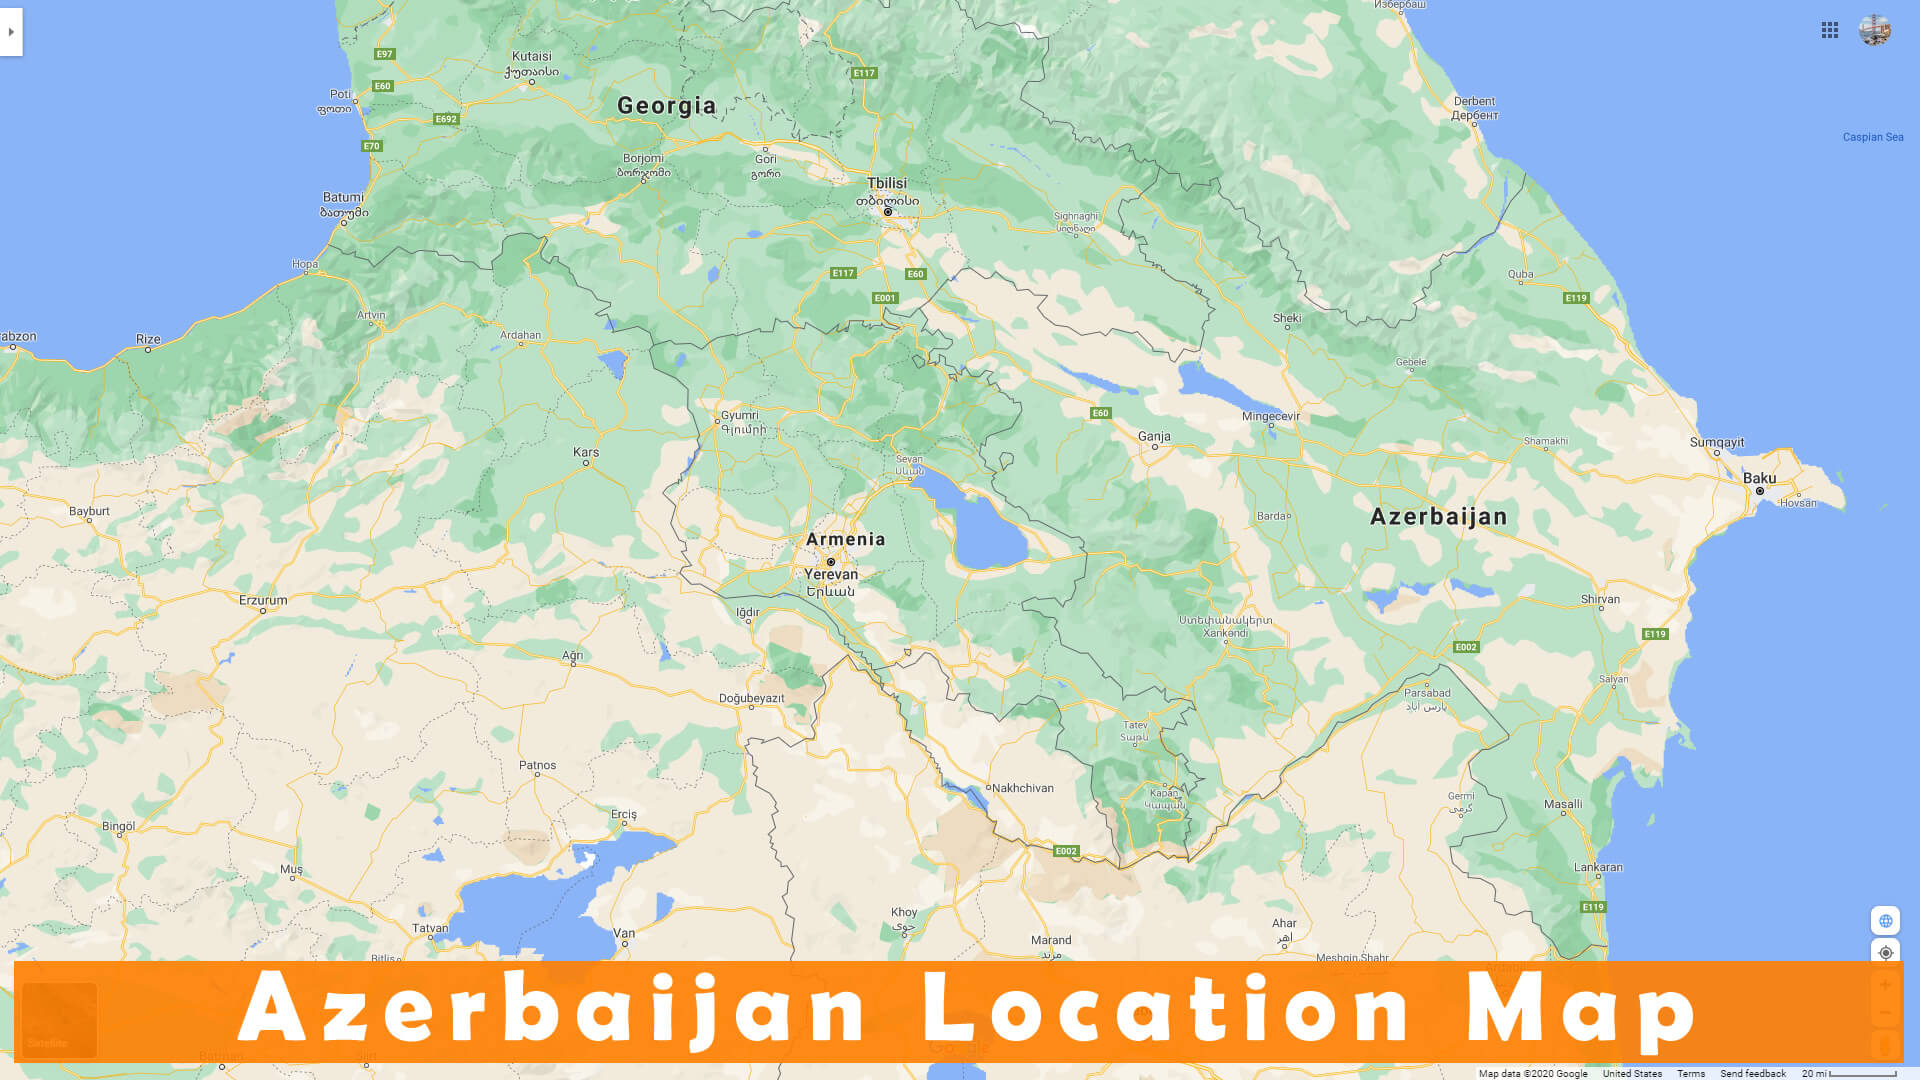 Azerbaijan Location Map